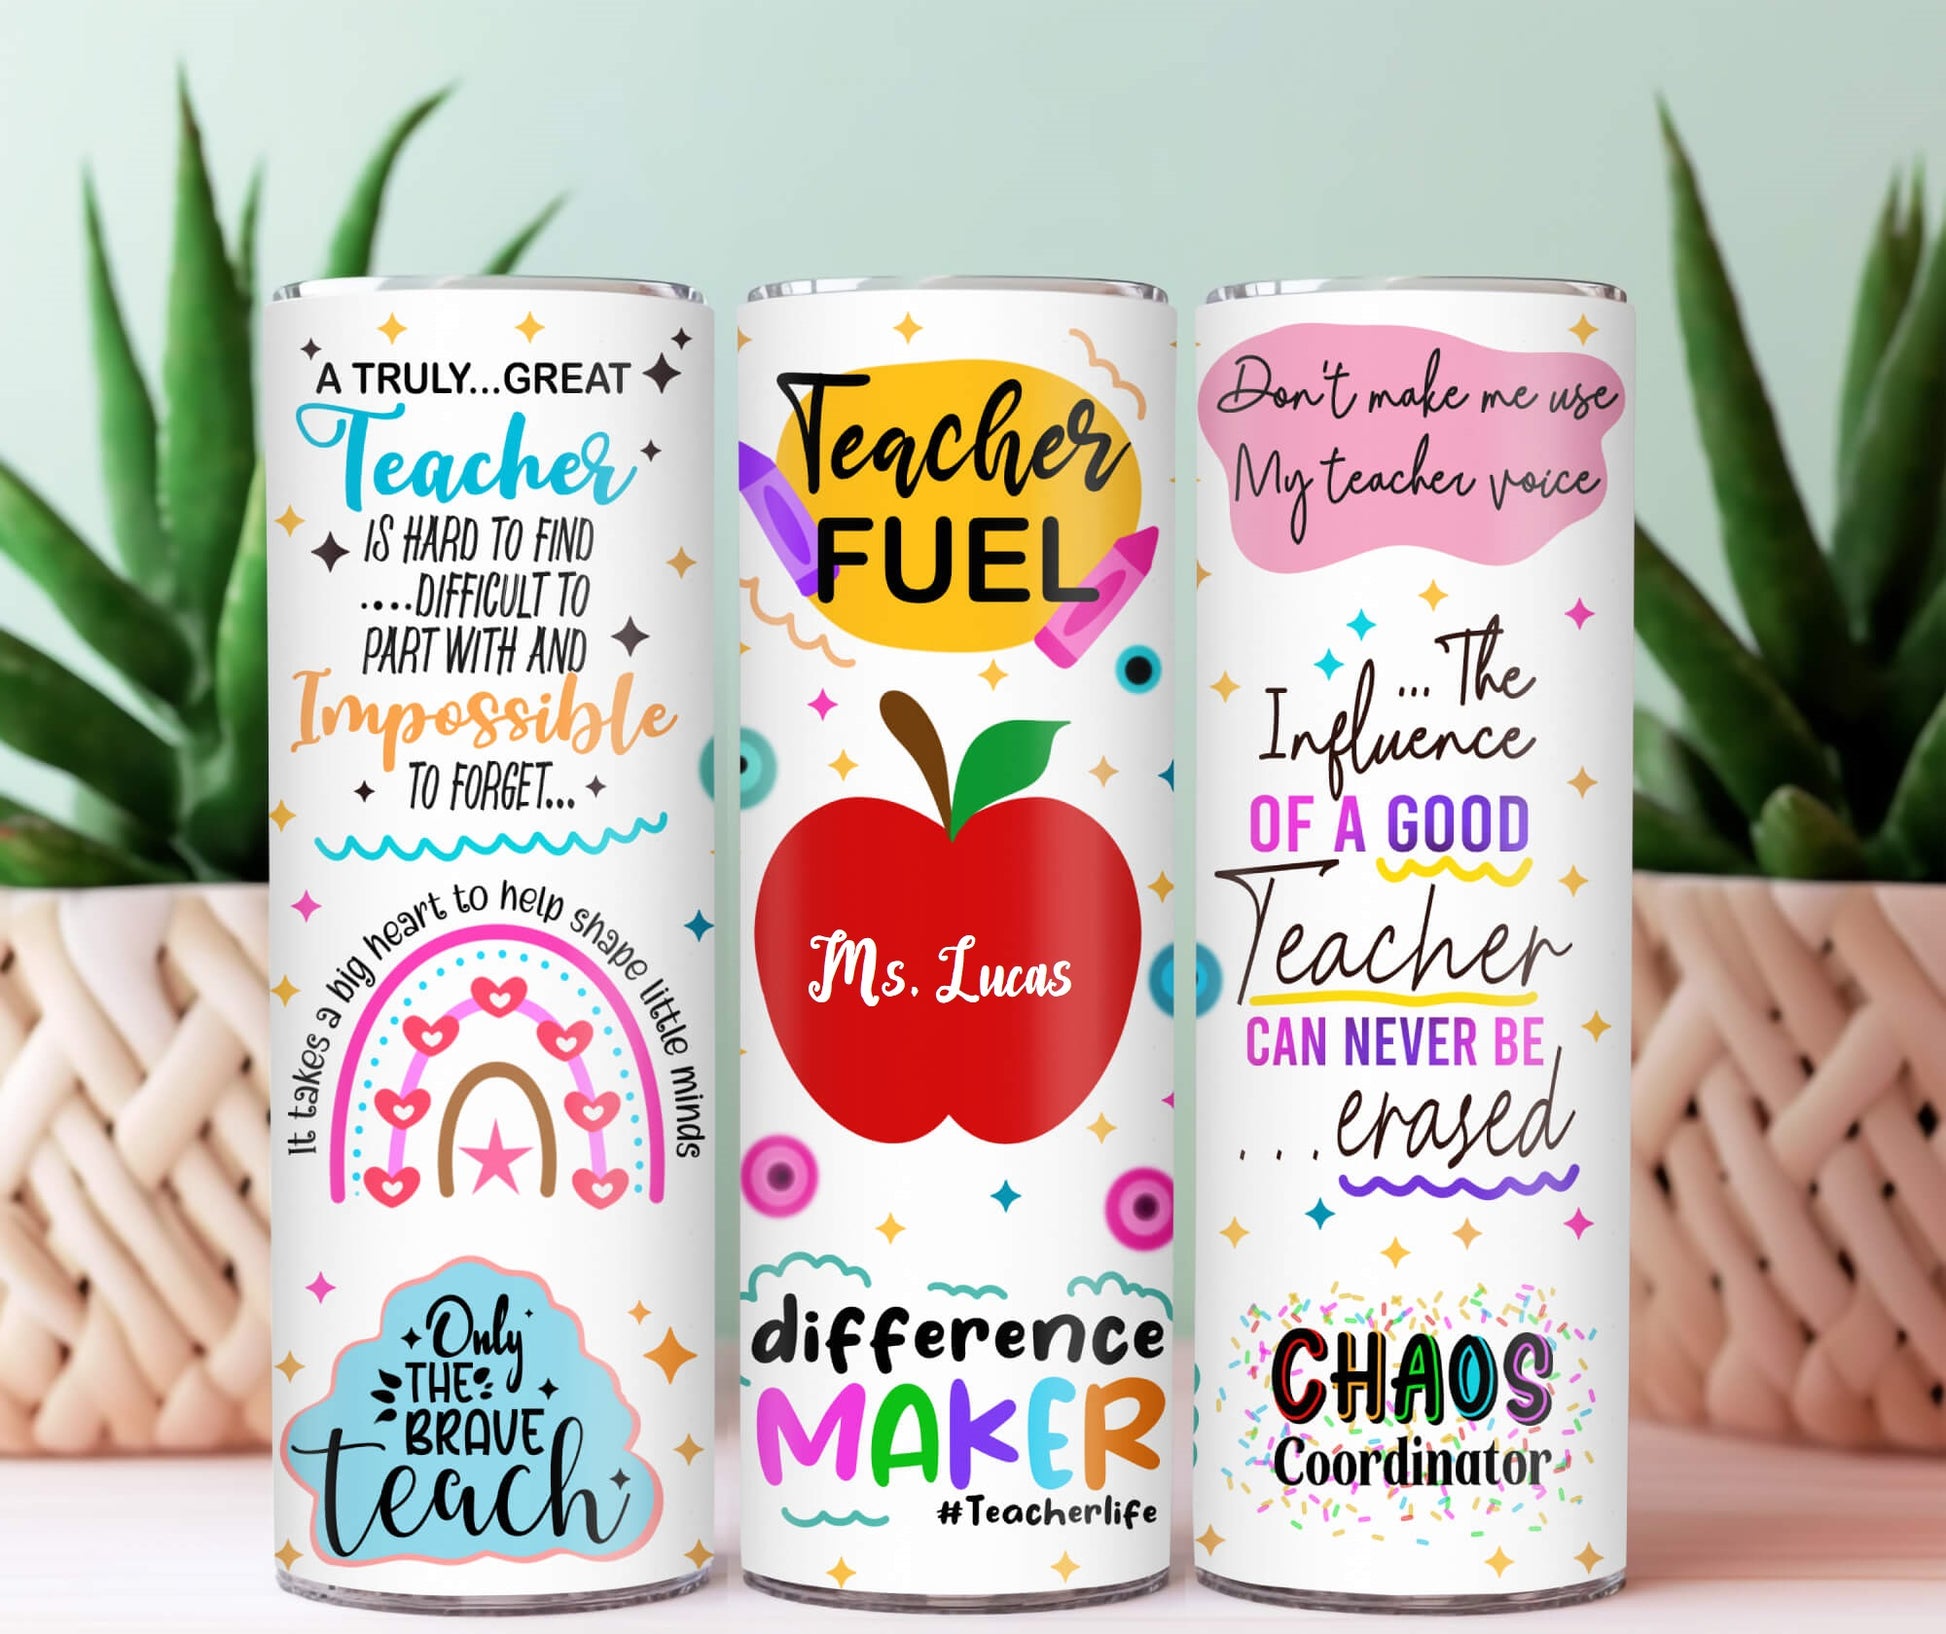 Teacher Life, Teacher Tumbler, Teacher Gift, Cute Teacher Gift, Teacher  Appreciation, Gift for Teacher, Teacher Cup, It Takes A Big Heart